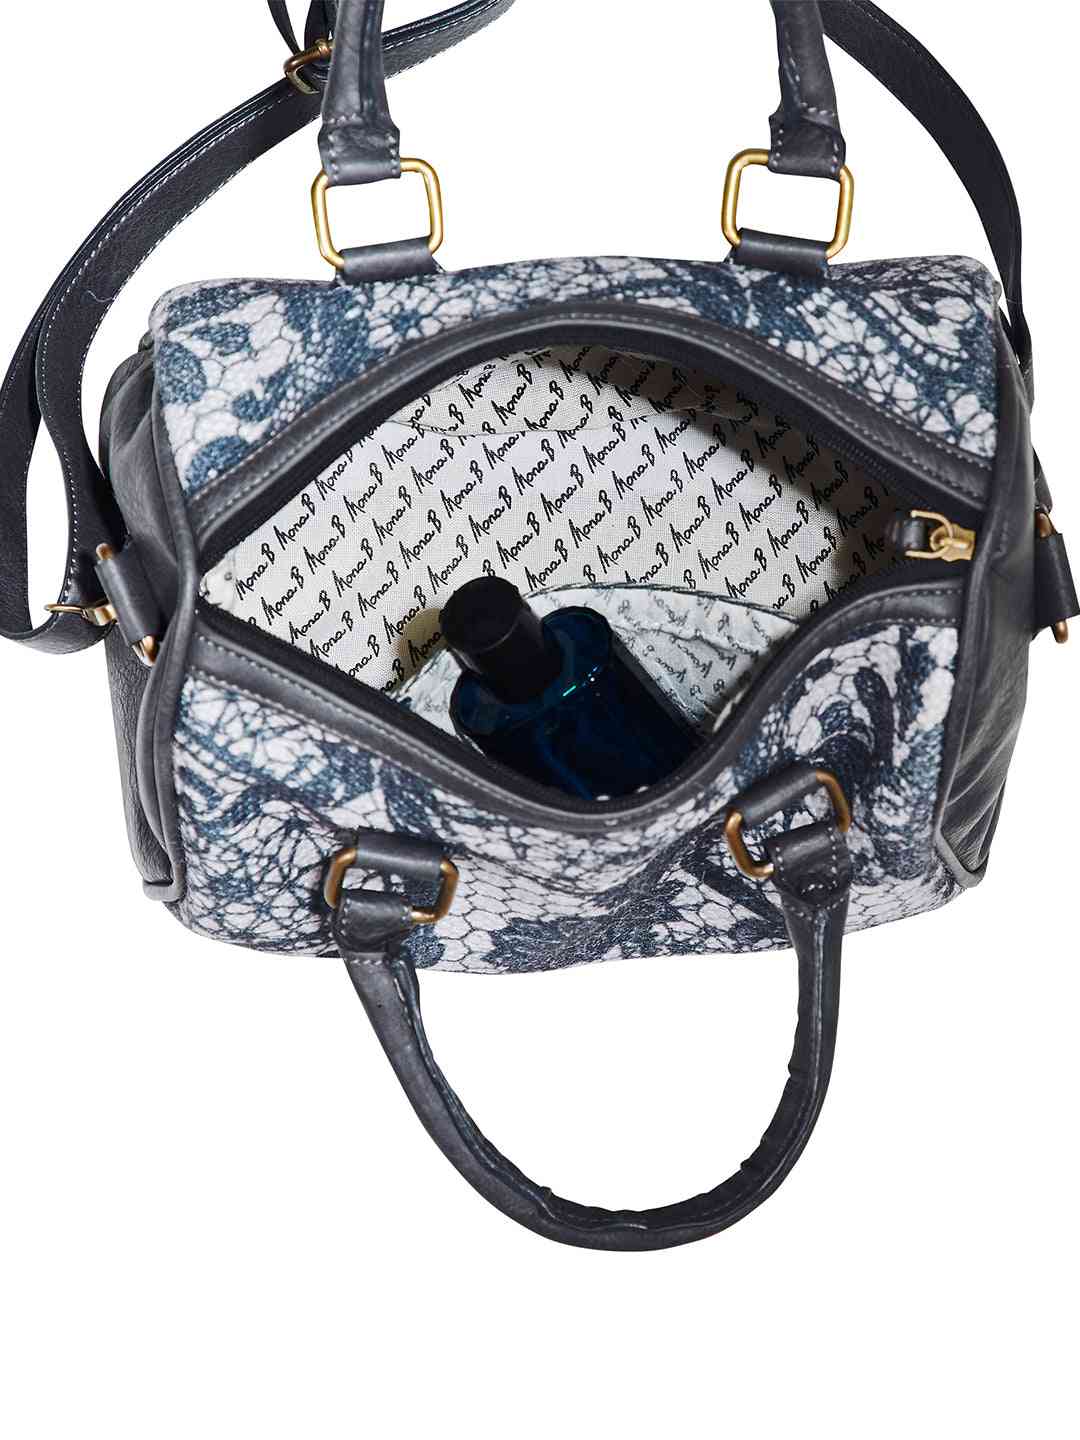 Mona-B Bag Mona B Canvas Small Vintage Handbag, Shoulder Bag, Crossbody Bag For Shopping, Travel With Stylish Design For Women (Grey, Kilim) - M-7003